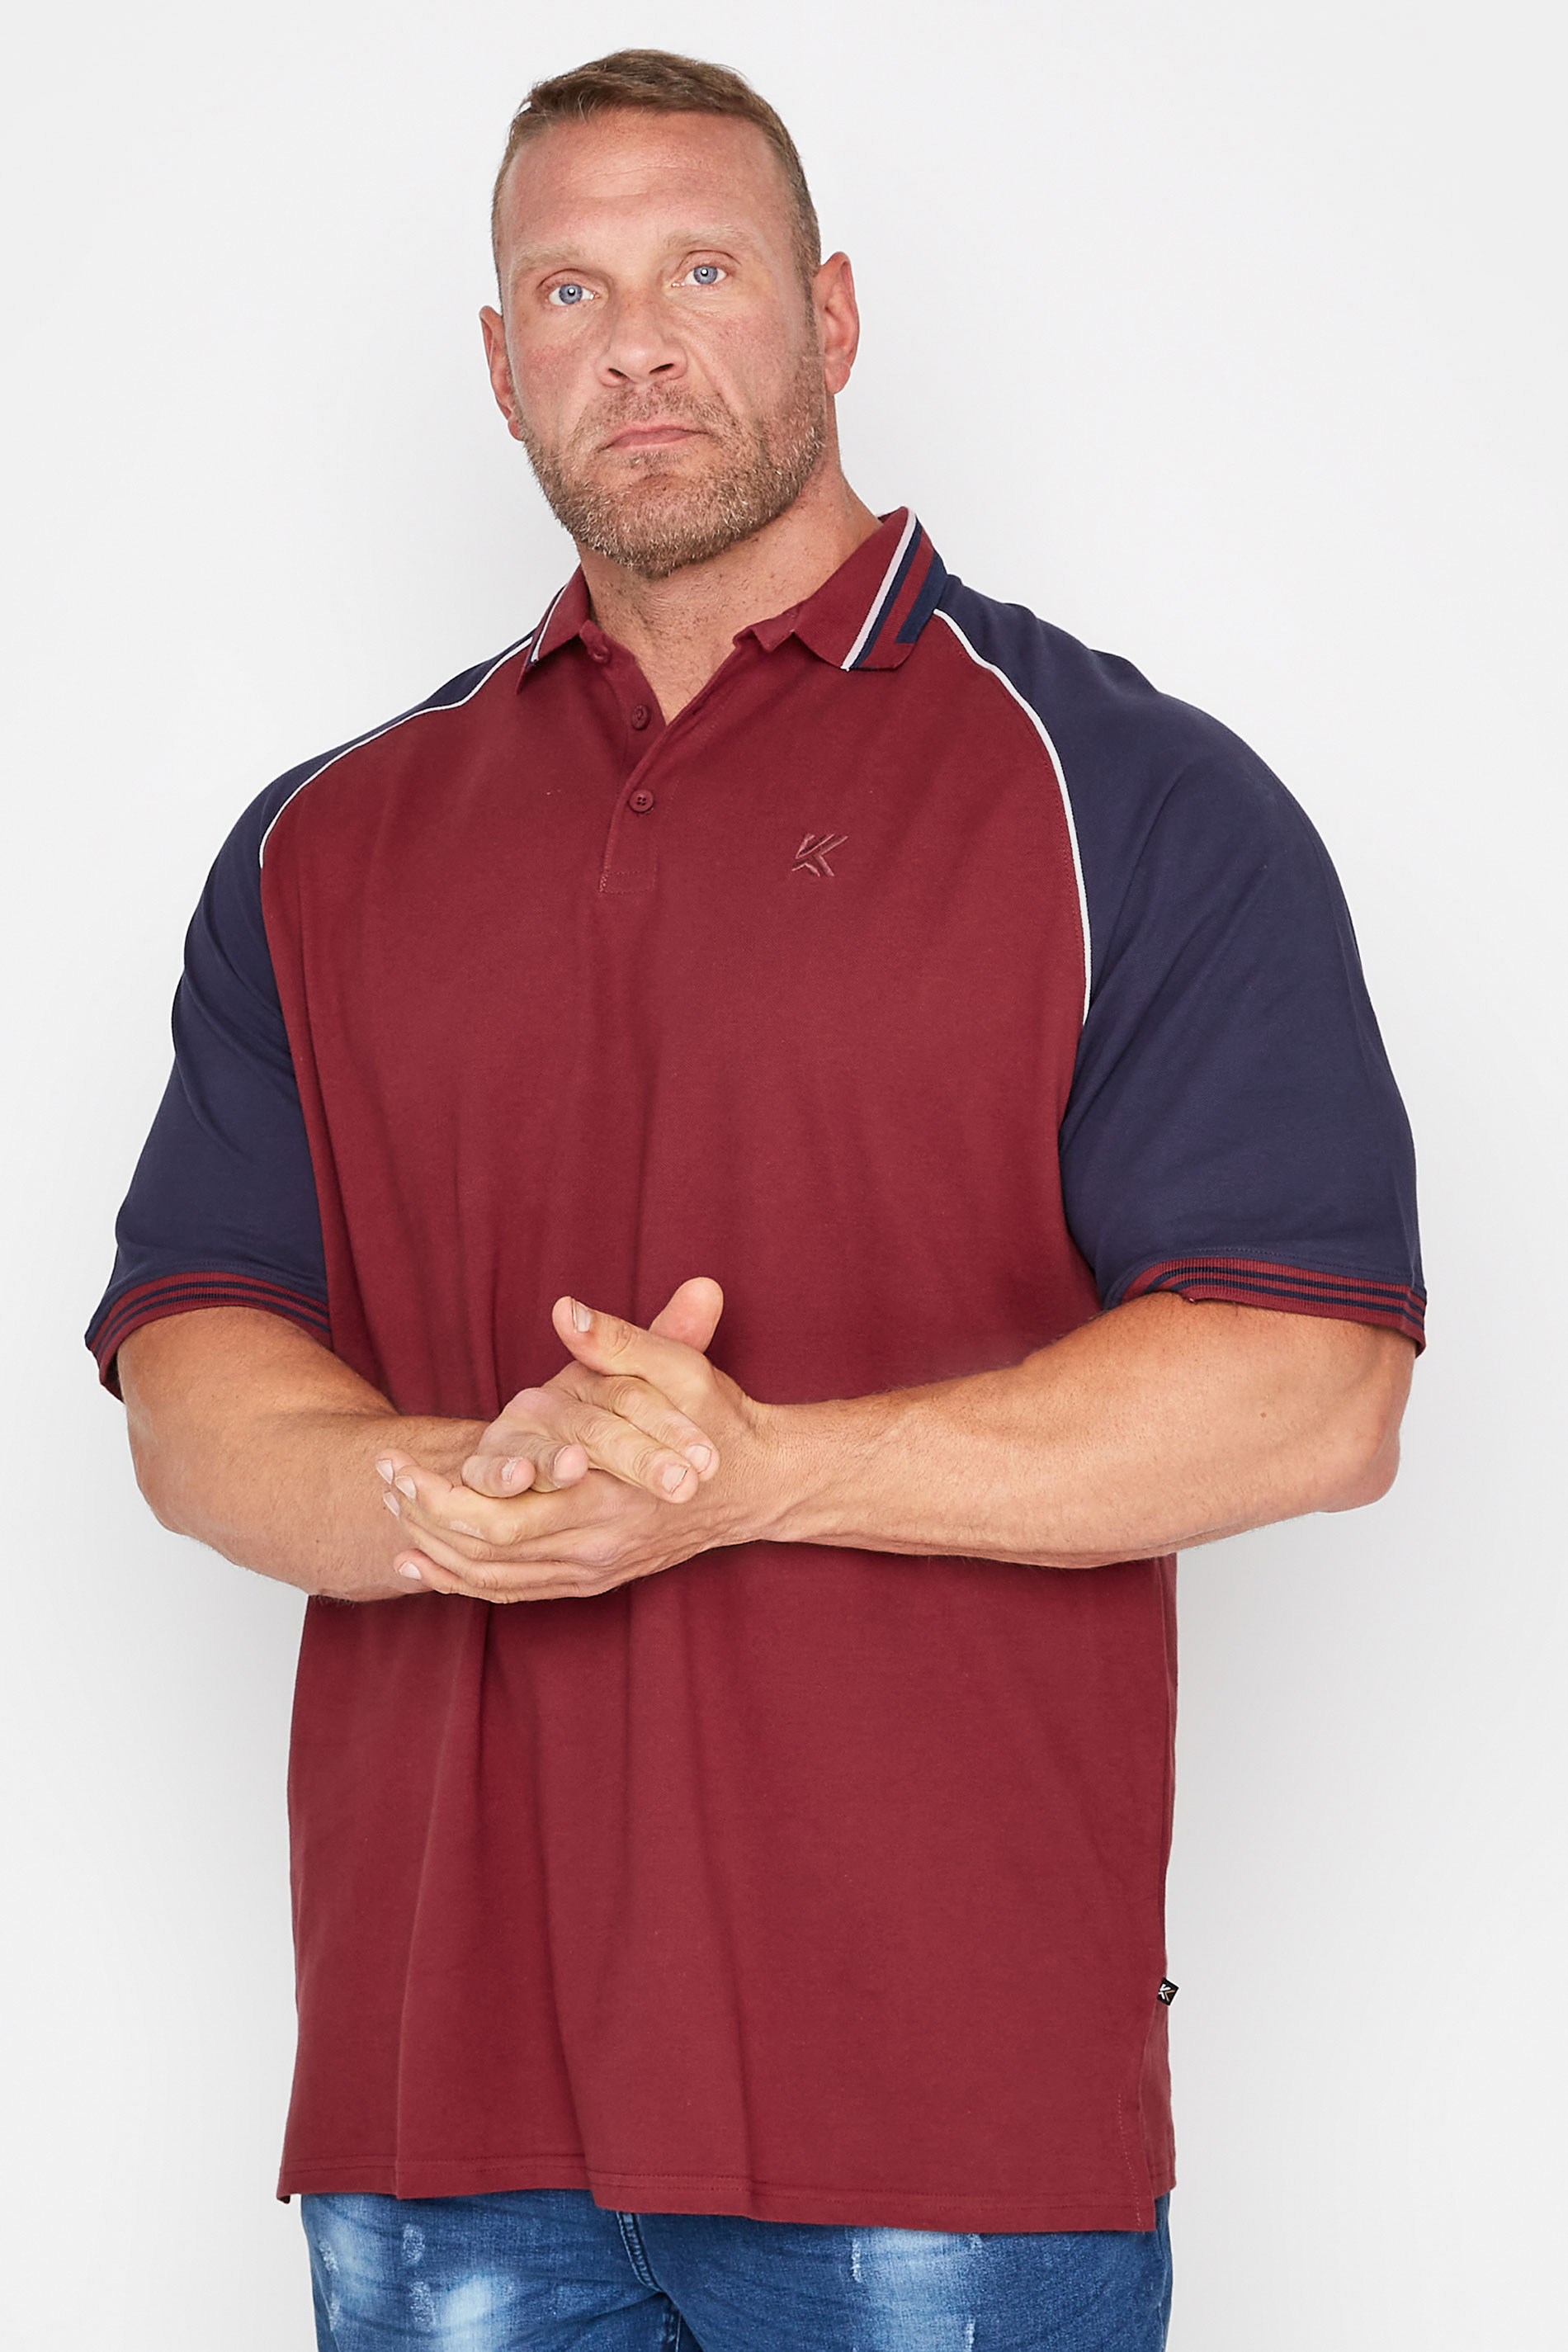 KAM Big & Tall Burgundy Red Raglan Tipped Polo Shirt 1